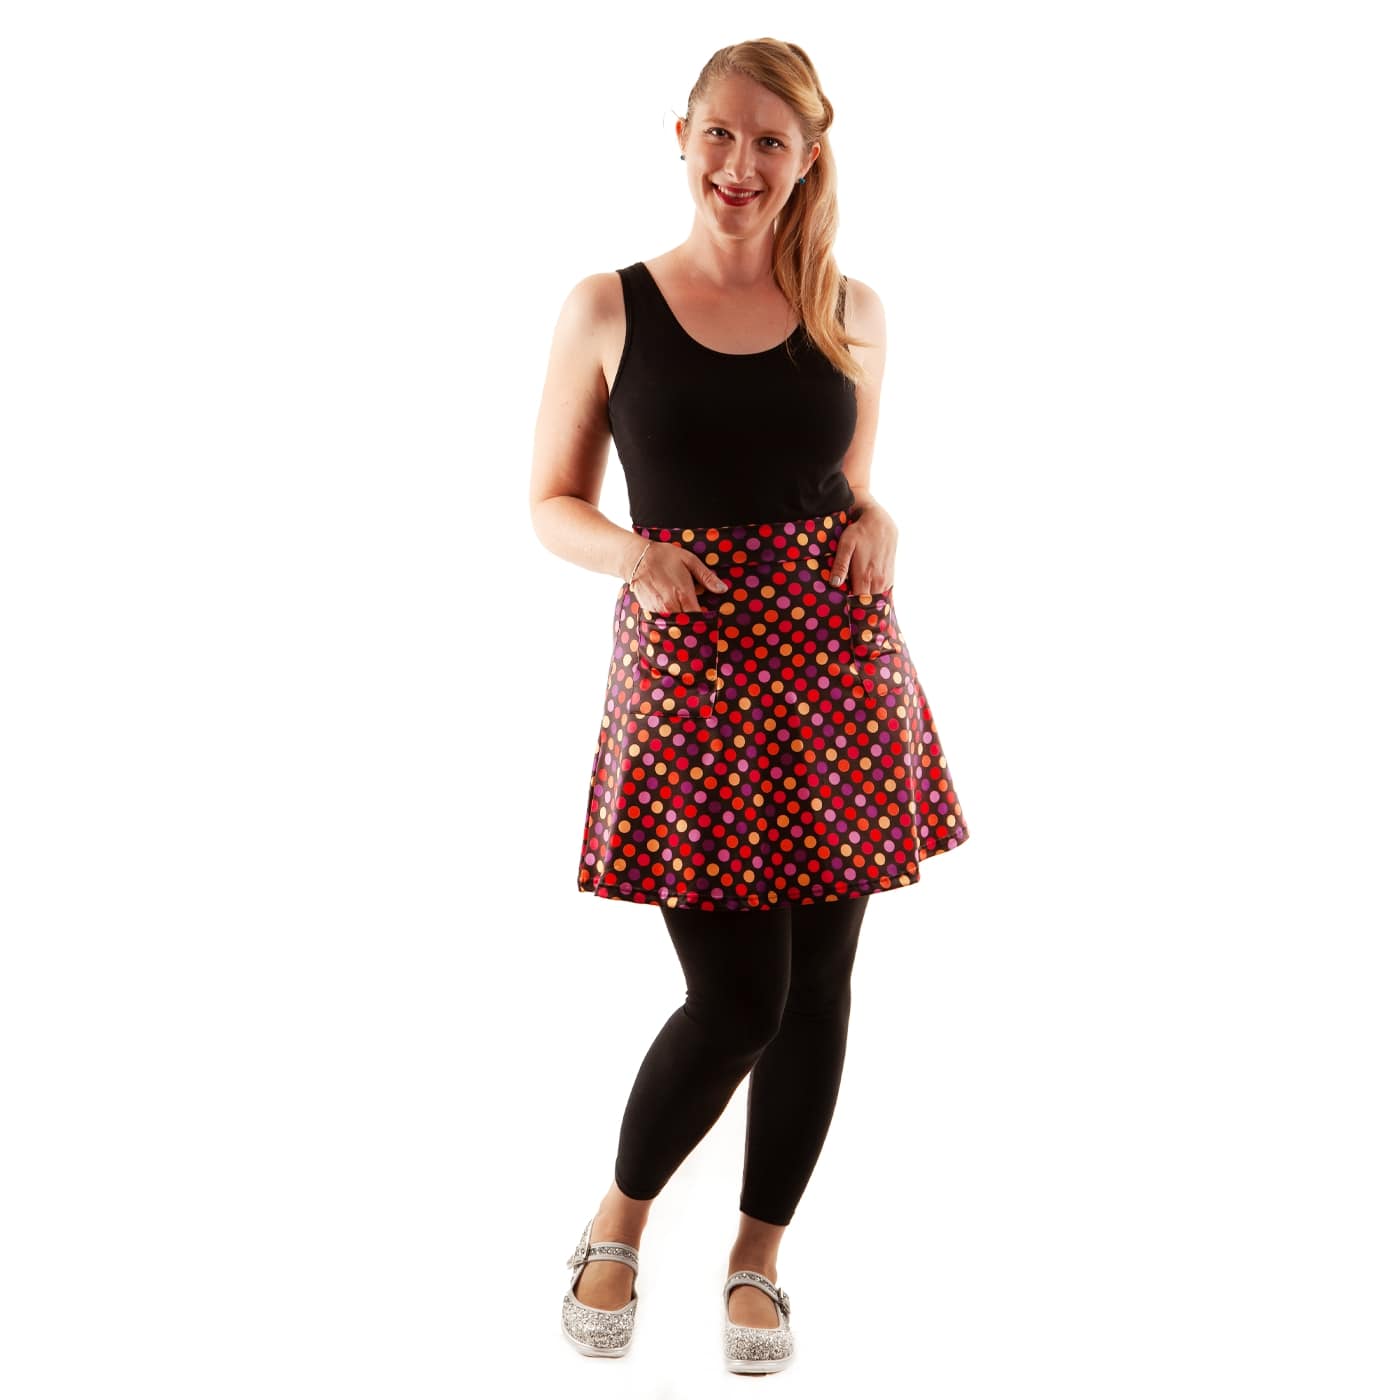 Pastel Confetti Short Skirt by RainbowsAndFairies.com (Pastel Polka Dots - Spots - Stripes - Skirt With Pockets - Aline Skirt - Cute Flirty - Vintage Inspired) - SKU: CL_SHORT_CONFT_PAS - Pic 03